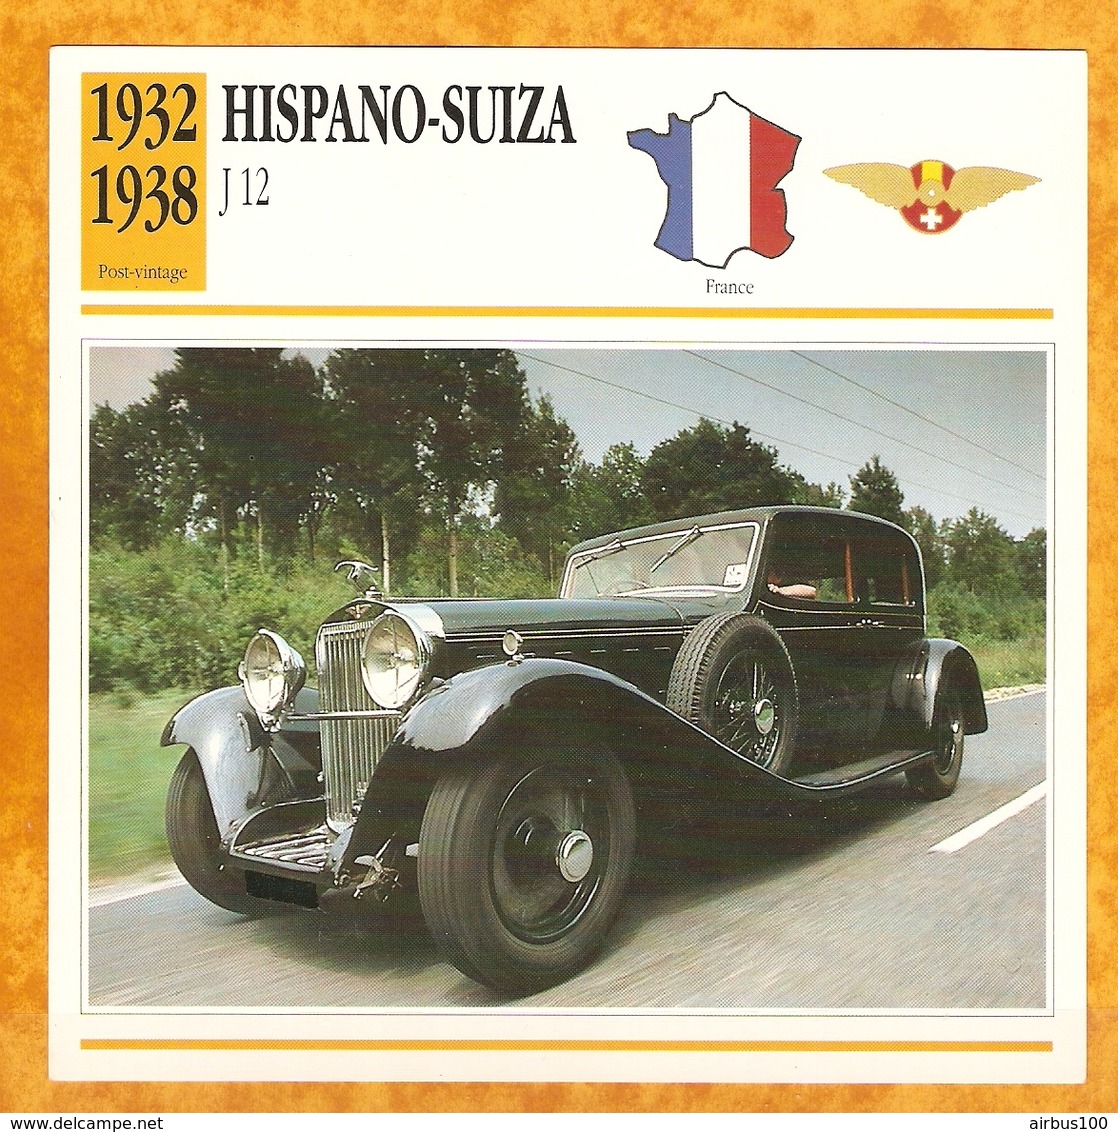 1932 FRANCE VIEILLE VOITURE HISPANO SUIZA J12 J 12- FRANCE OLD CAR - FRANCIA VIEJO COCHE - VECCHIA MACCHINA - Voitures